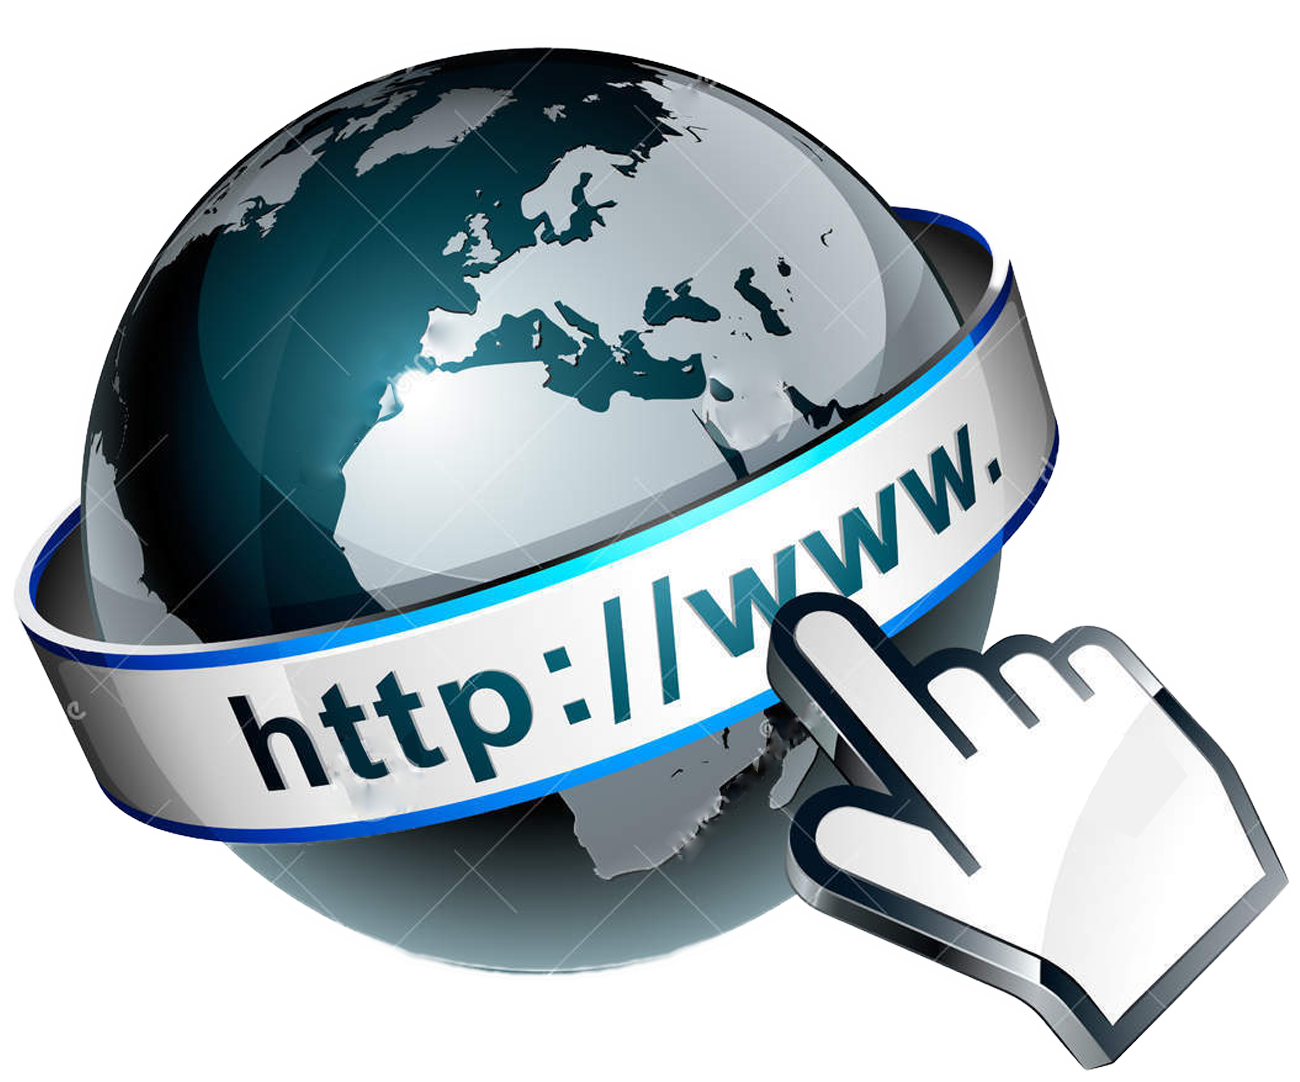 Website world wide web